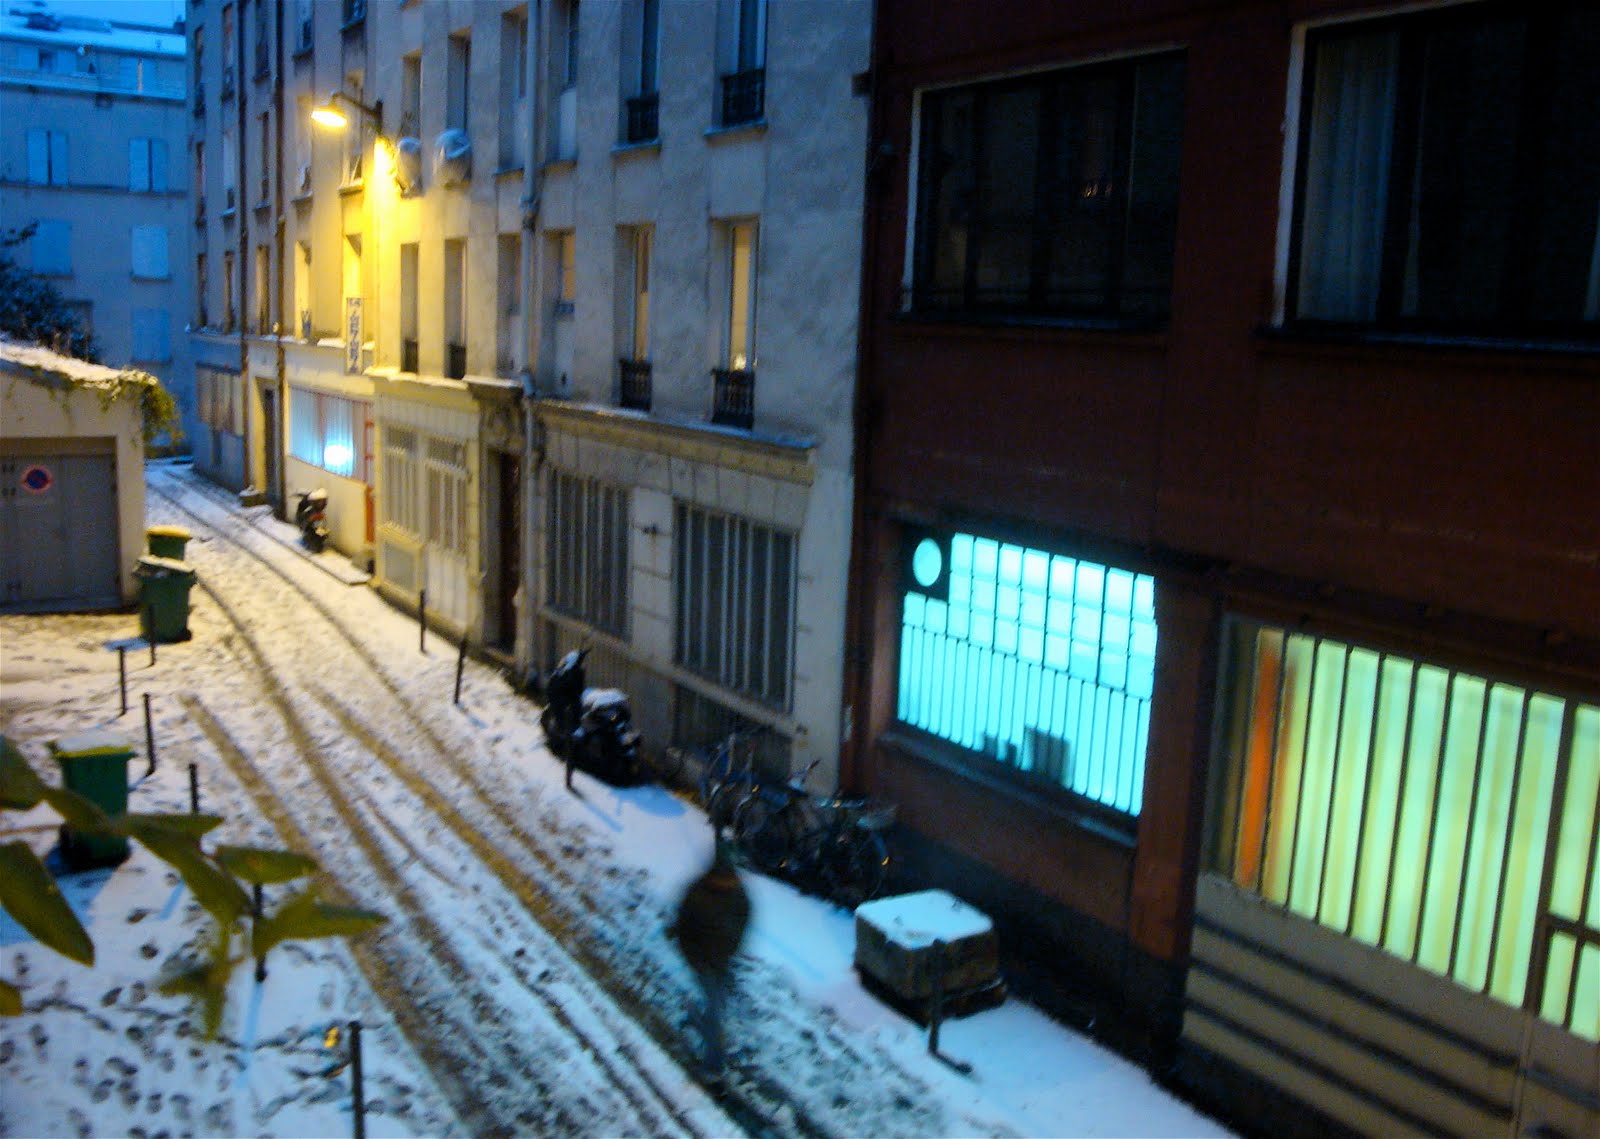 ParisPointGriset: Fantastic snowfall over Paris on December 8/2010